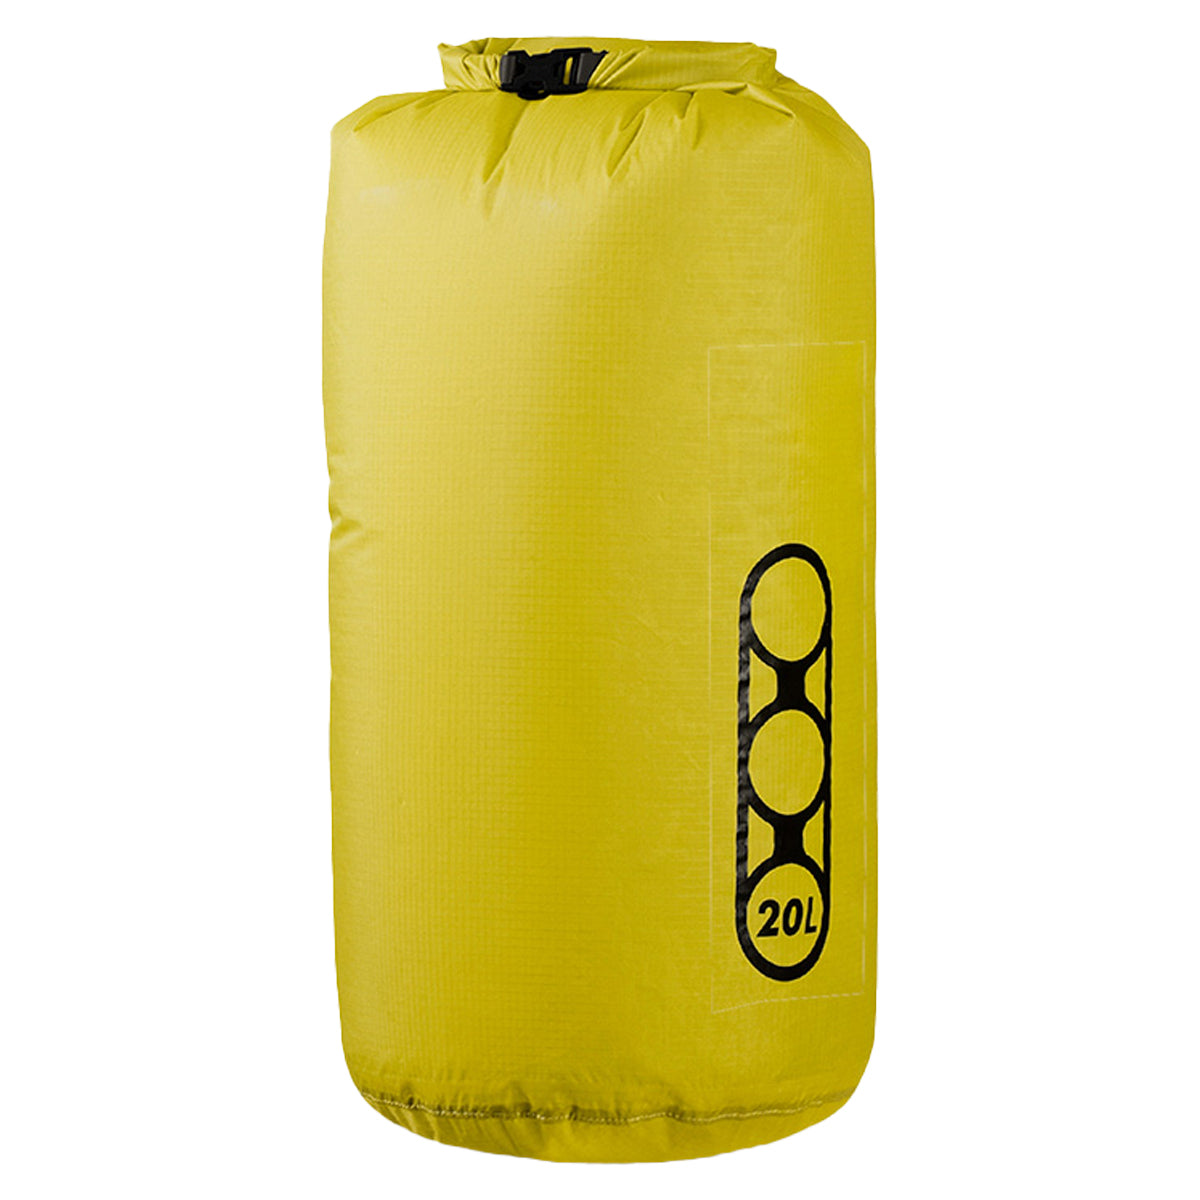 Eberlestock Cirrus Ultralight Dry Bag in  by GOHUNT | Eberlestock - GOHUNT Shop